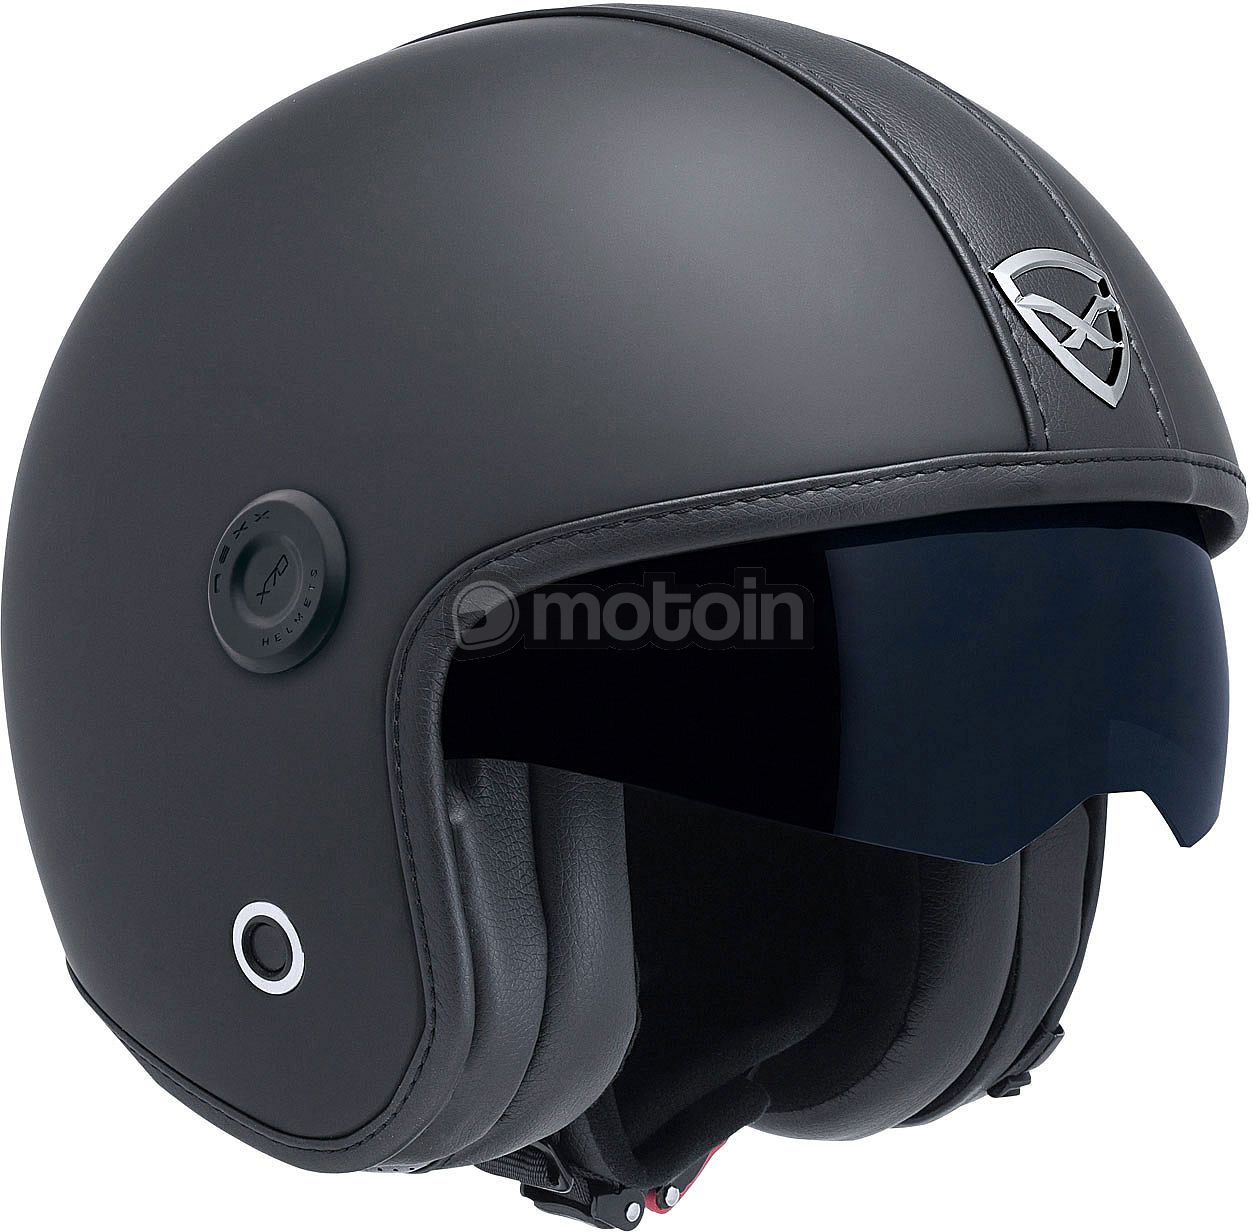 Nexx X70 Core, capacete Jet